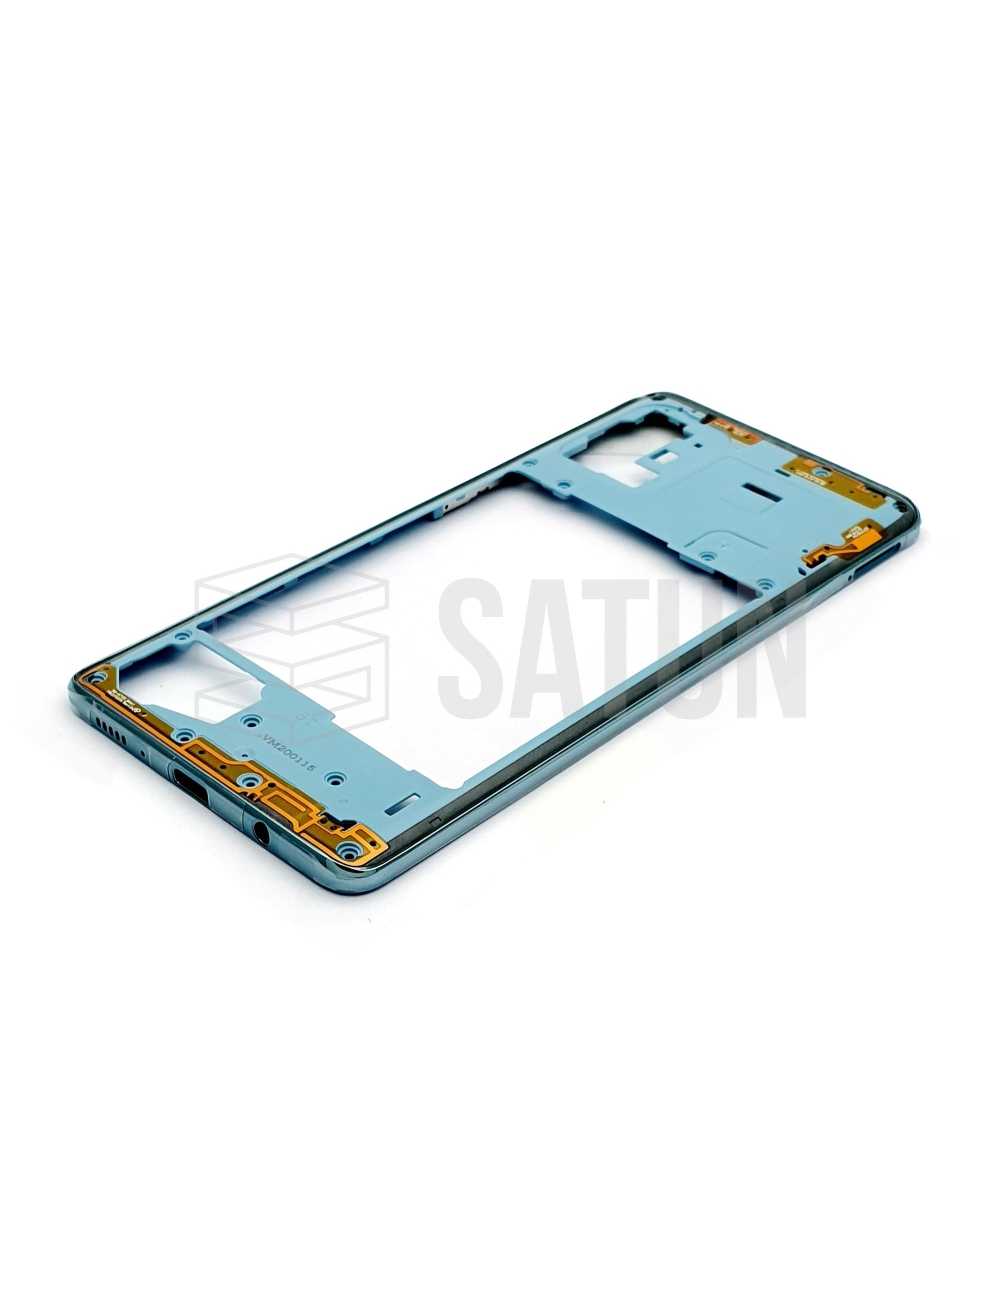 Carcasa intermedia original Samsung Galaxy A71 azul